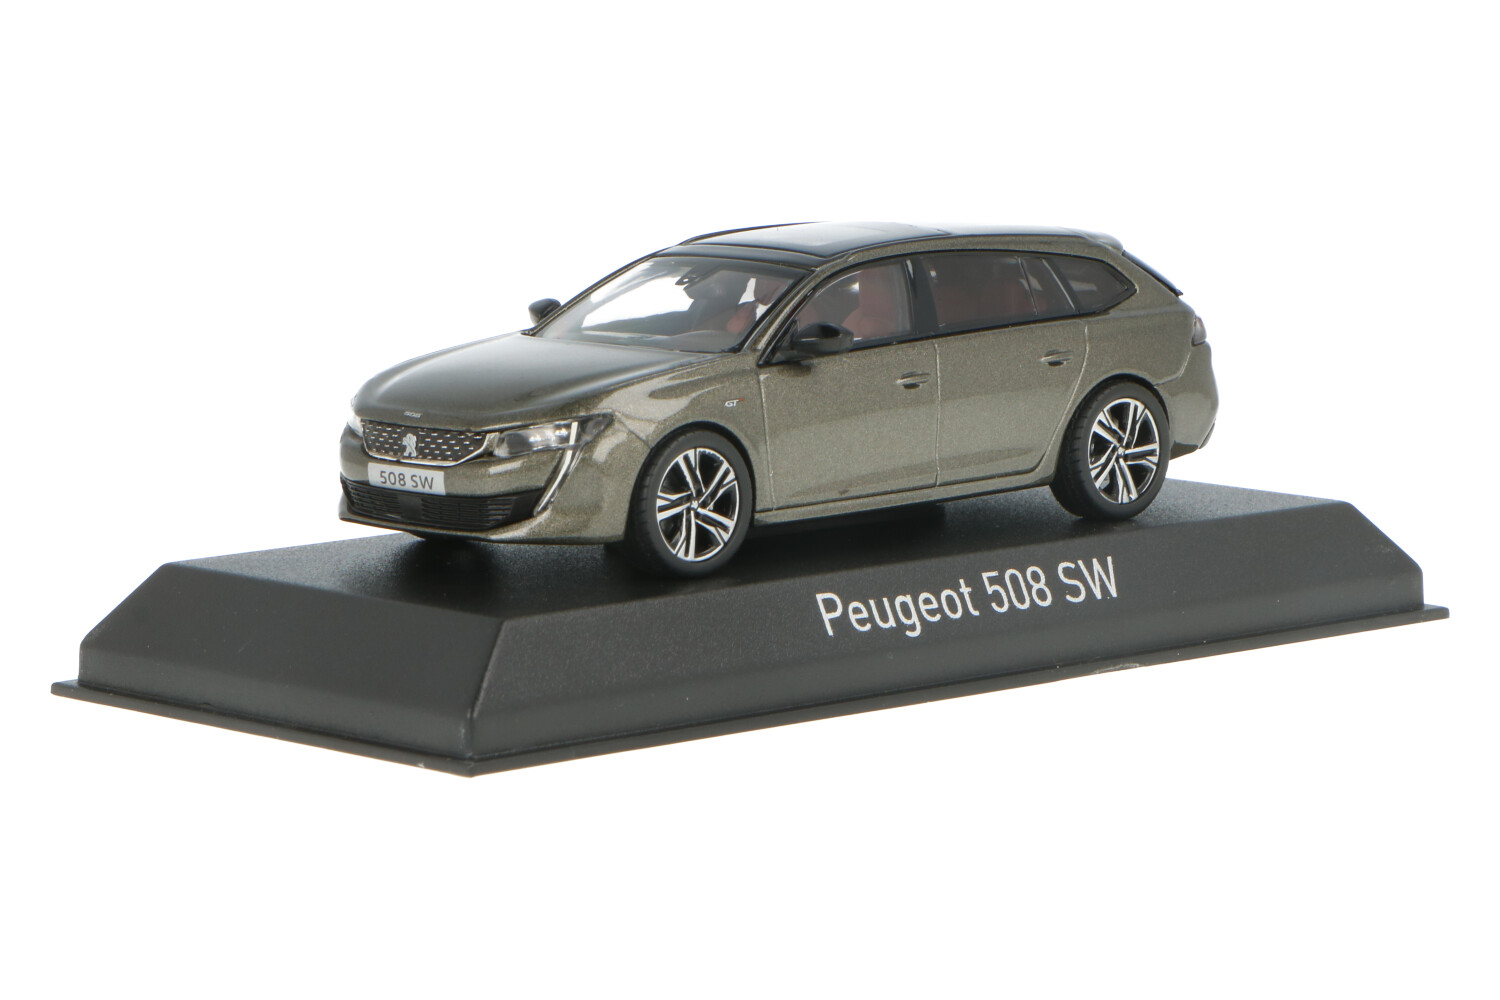 Peugeot-508-SW-GT-475825_13153551094758256Peugeot-508-SW-GT-475825_Houseofmodelcars_.jpg